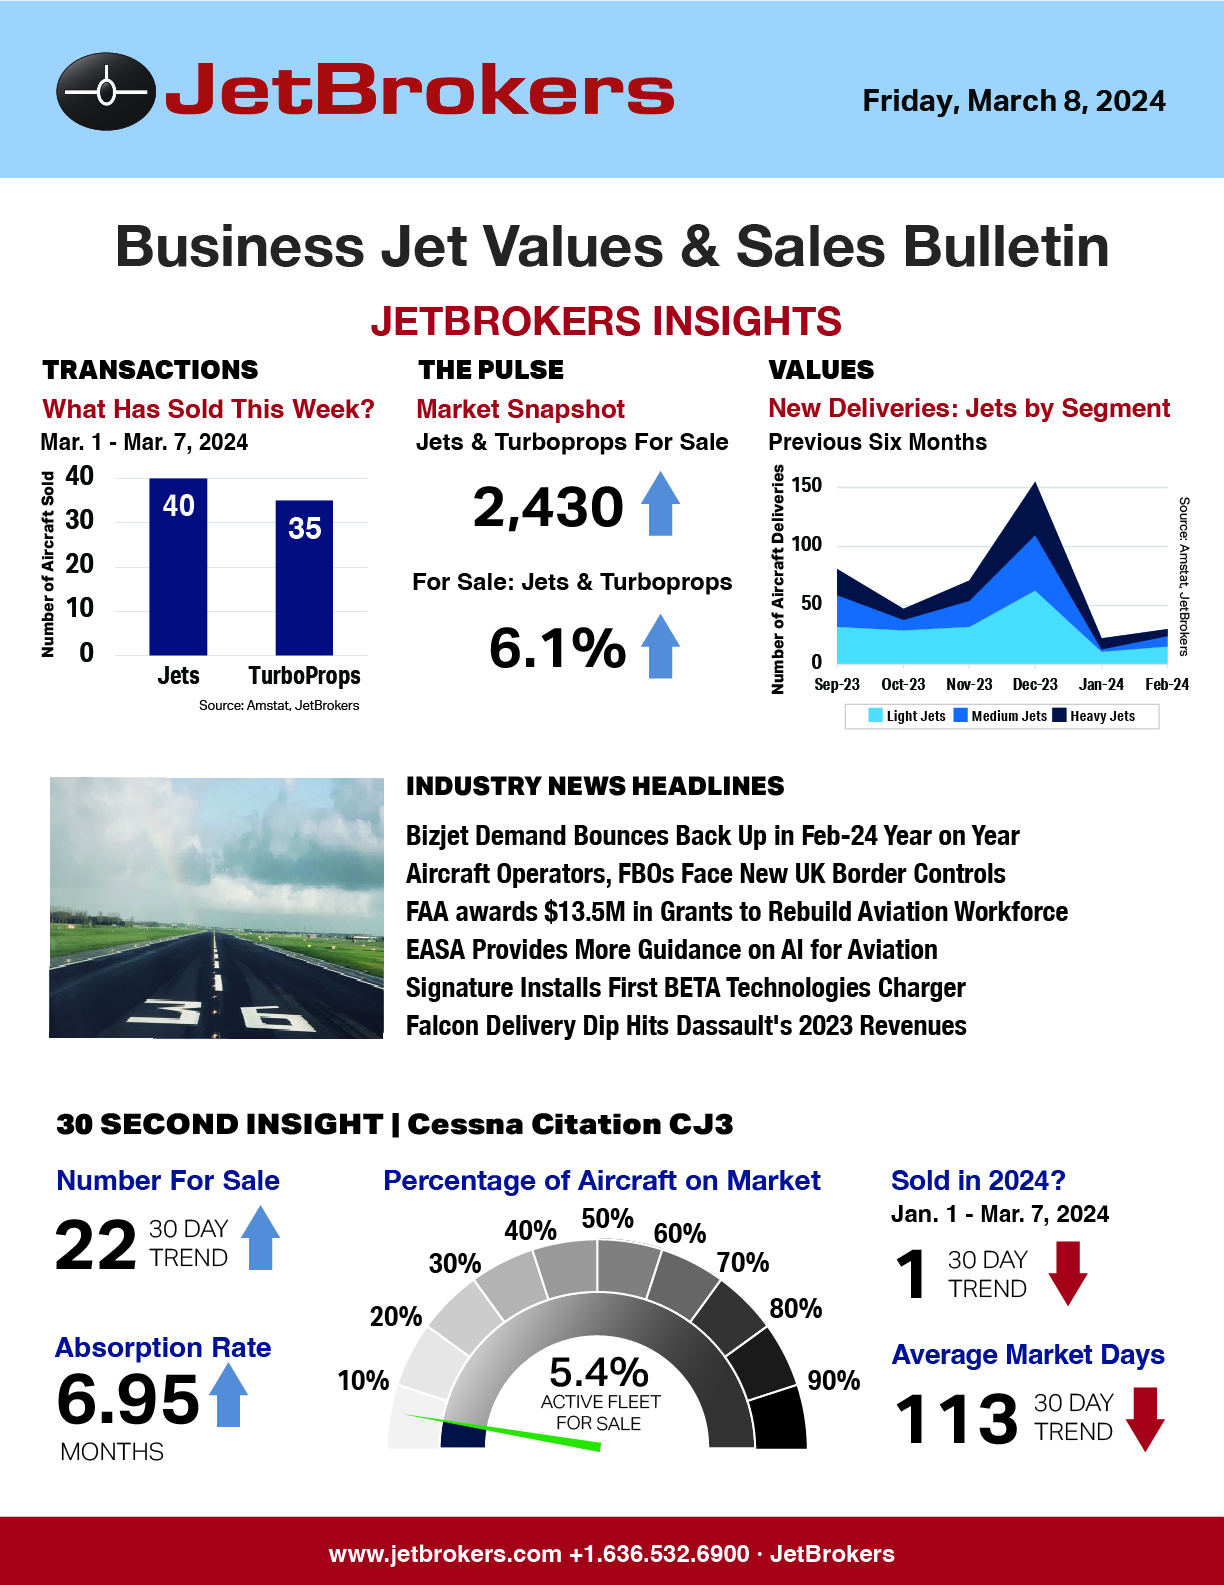 JetBrokers Business Jet Values & Sales Bulletin - March 8, 2024